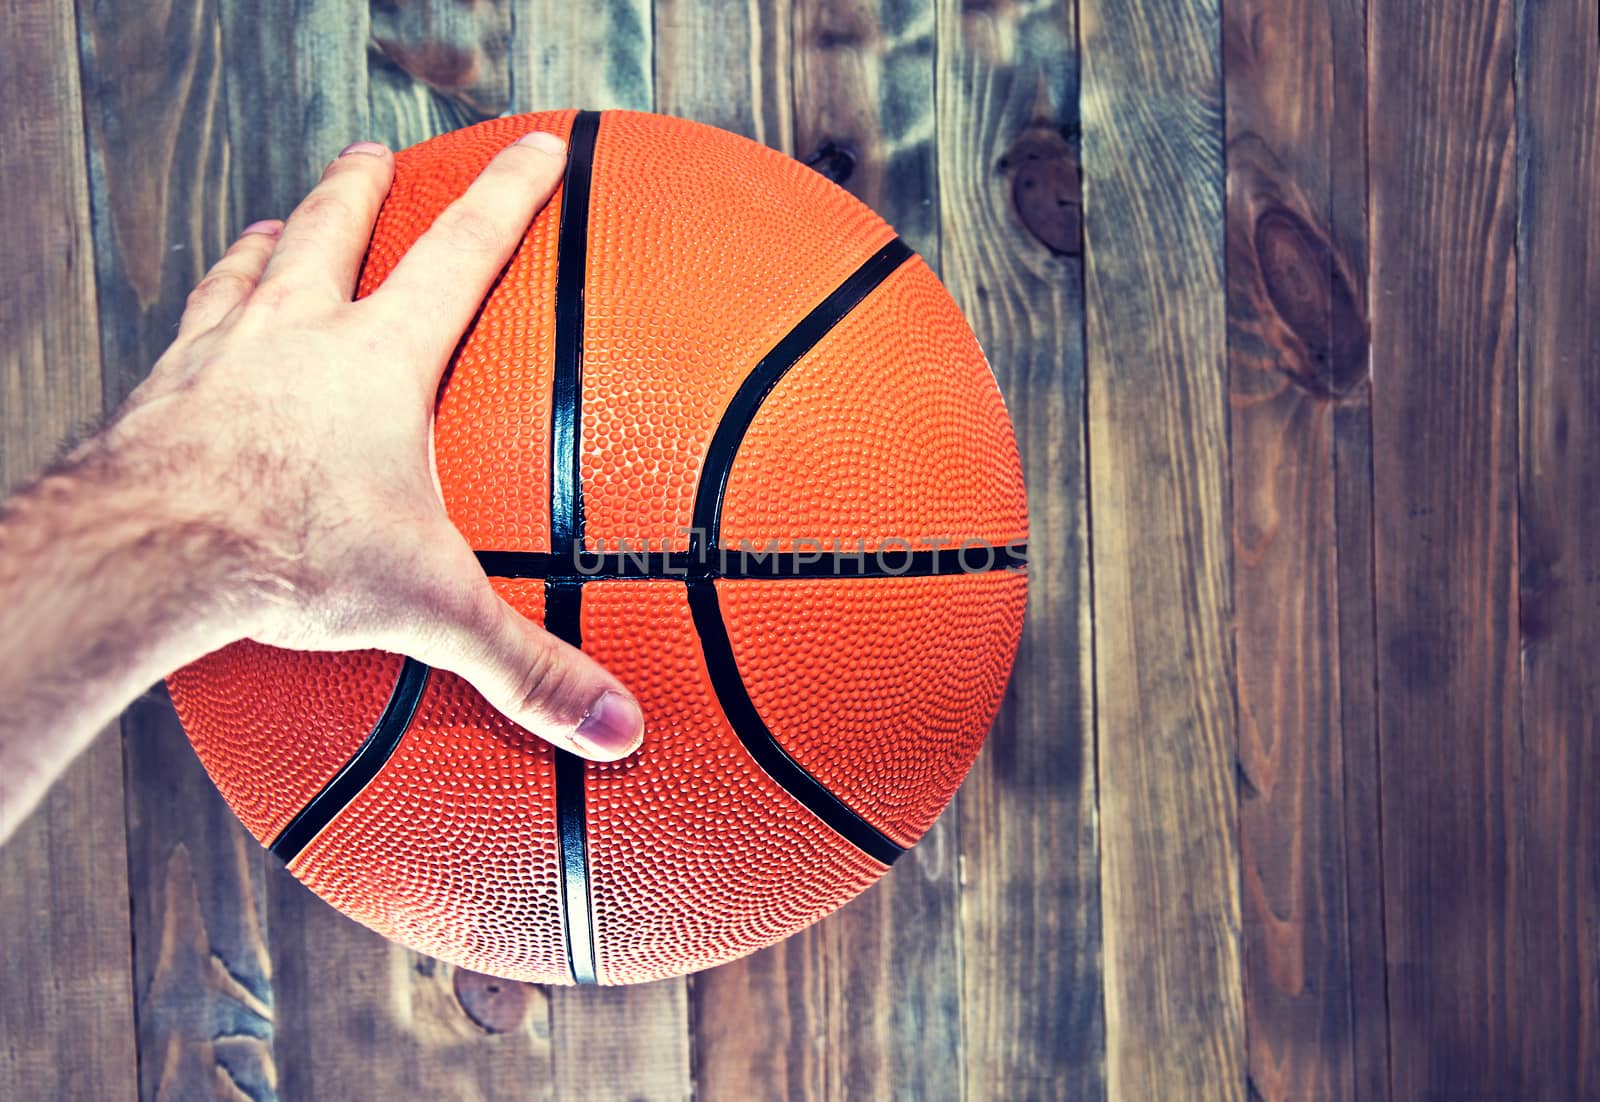 Basketball ball on wooden hardwood floor grabbing by hand. by satariel